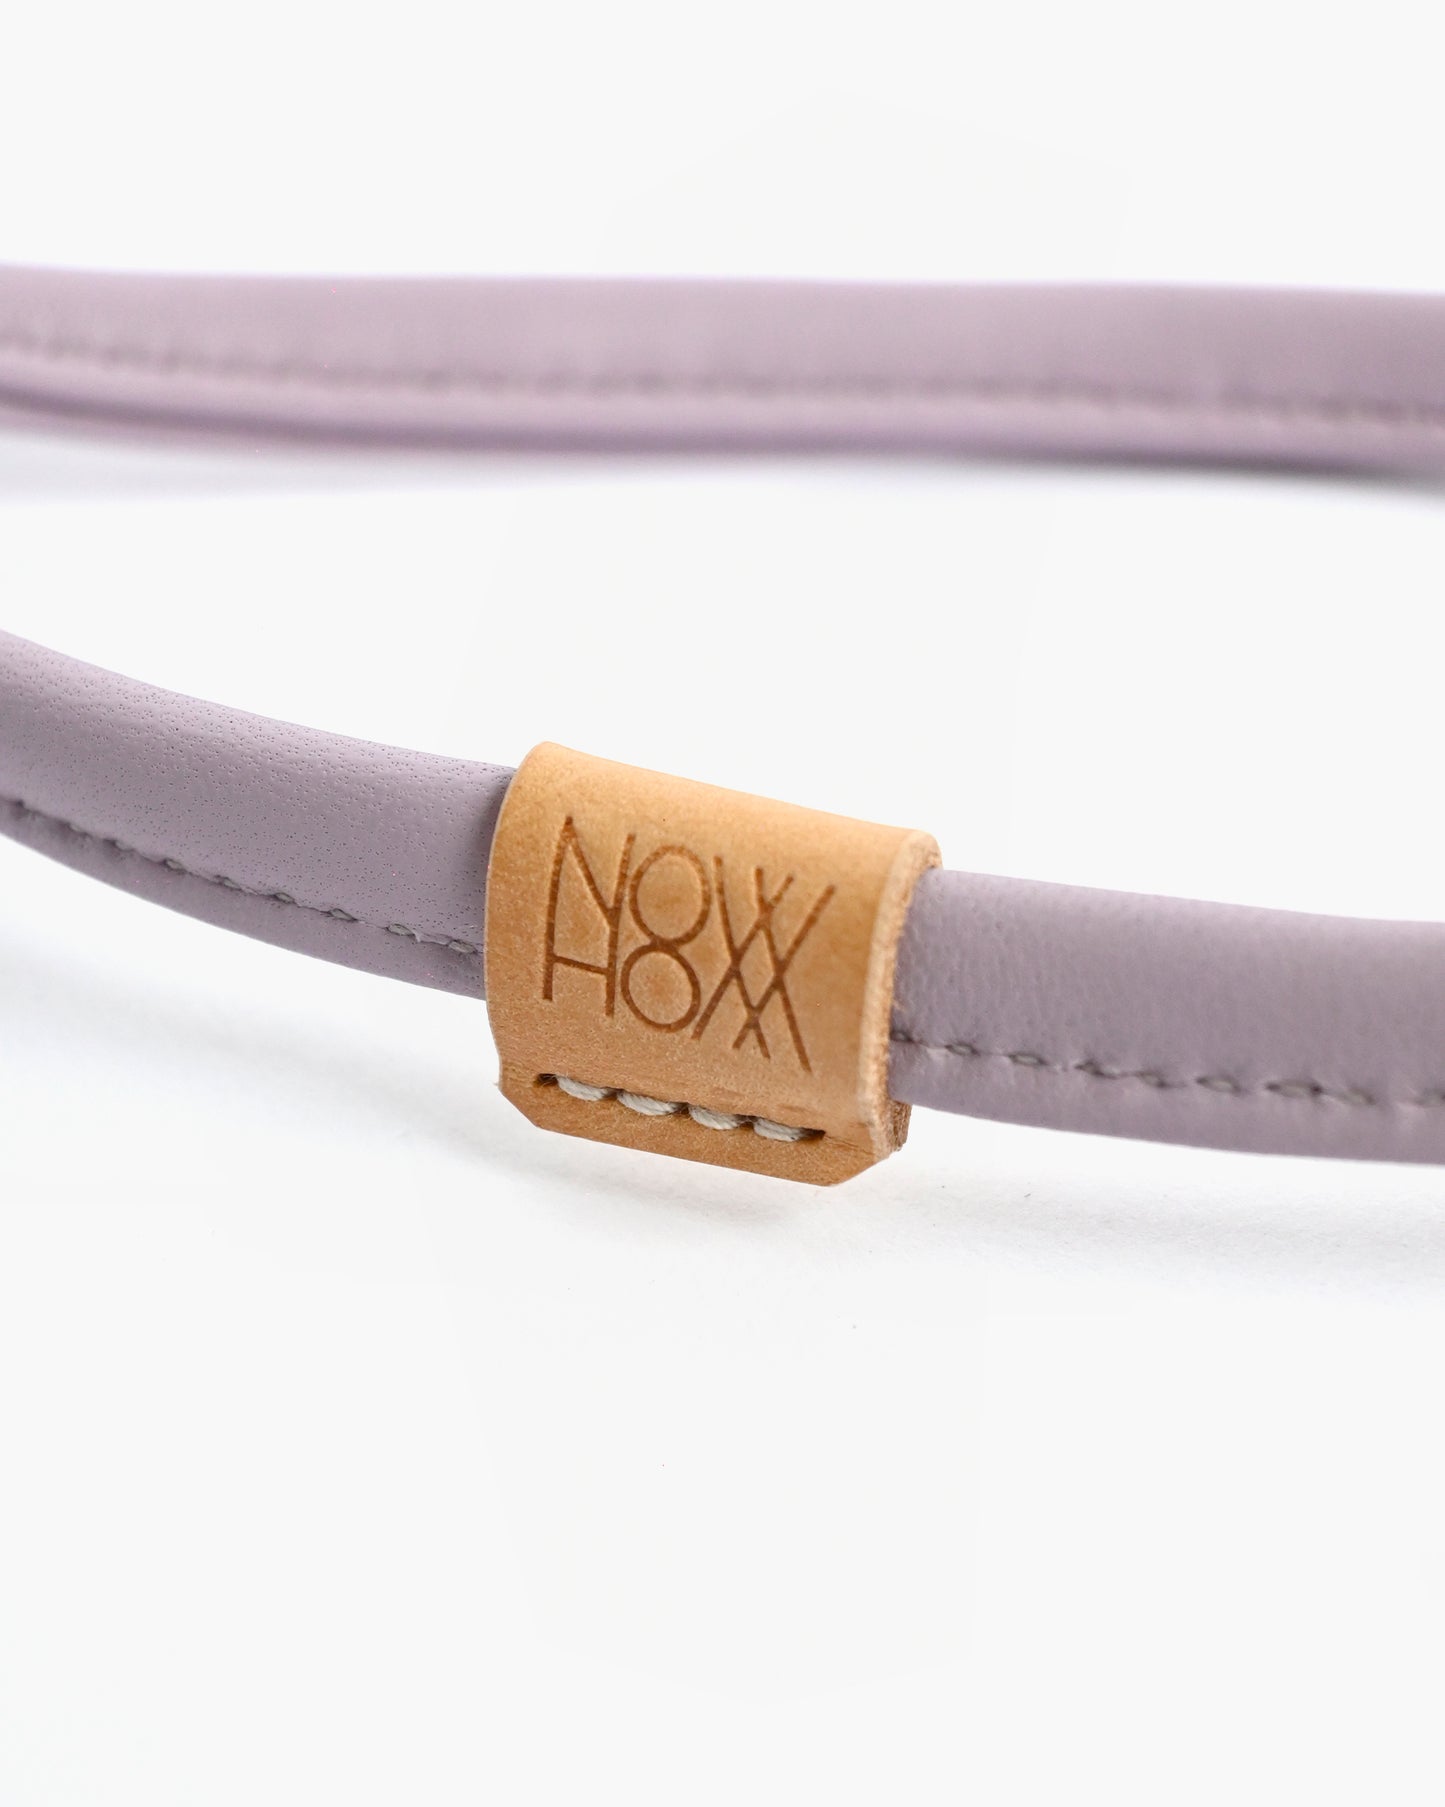 "NOWHOW" Key String M - Lavender